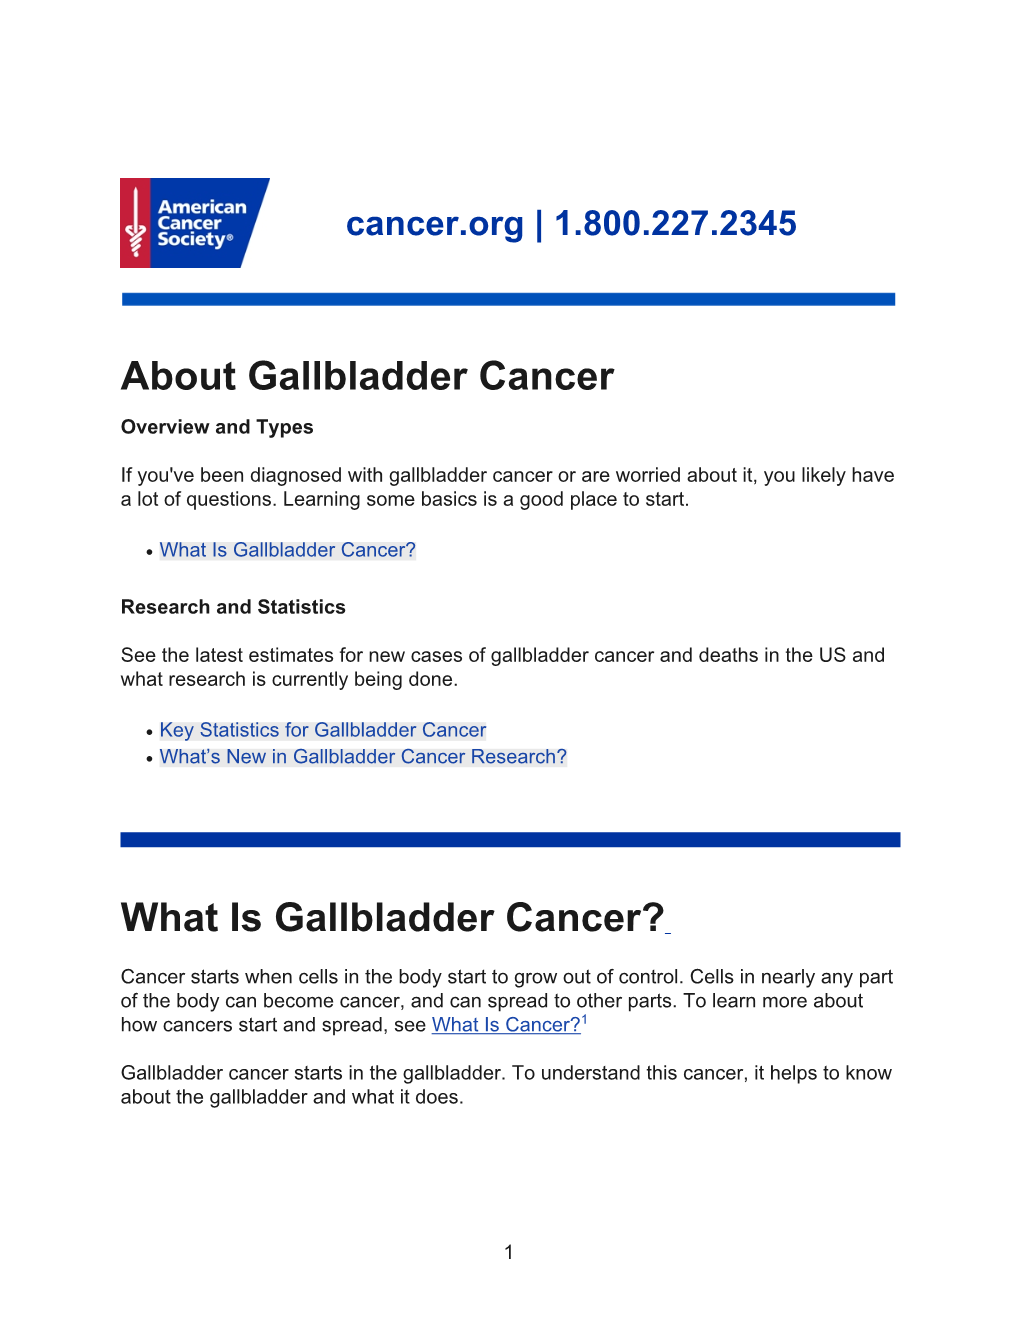 What Is Gallbladder Cancer?